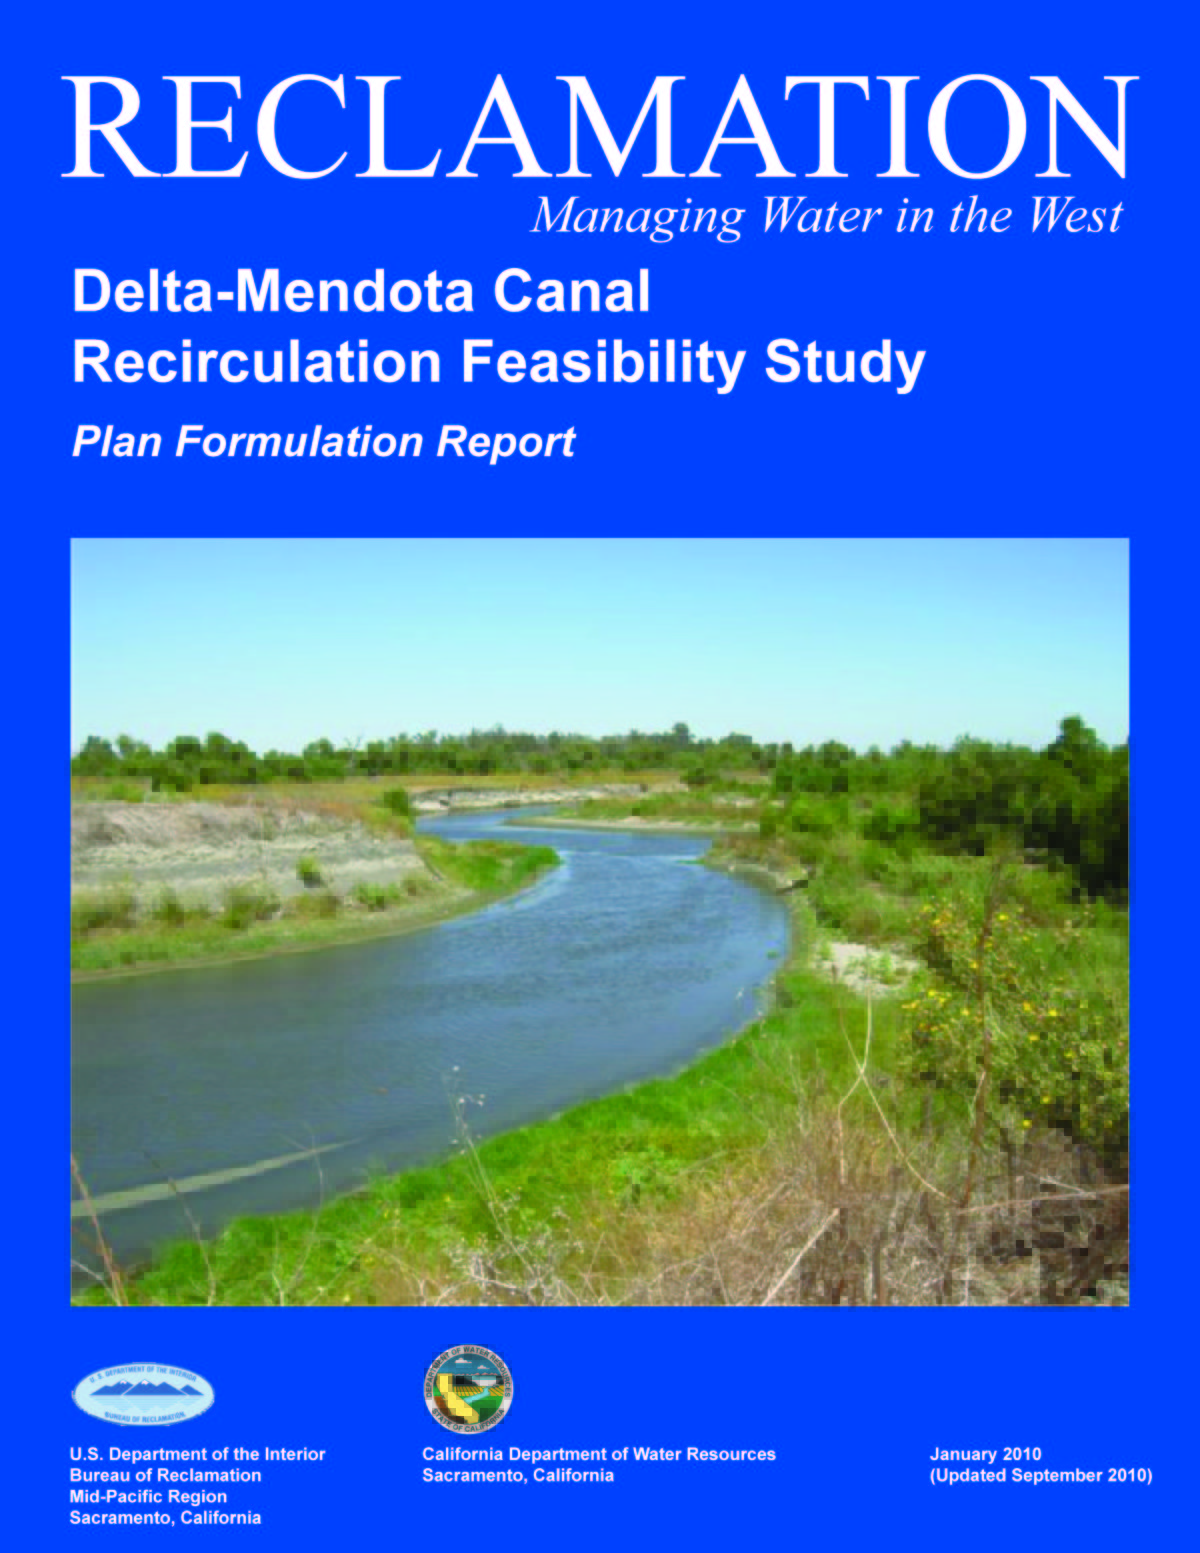 Delta-Mendota Canal Recirculation Feasibility Study Plan Formulation Report